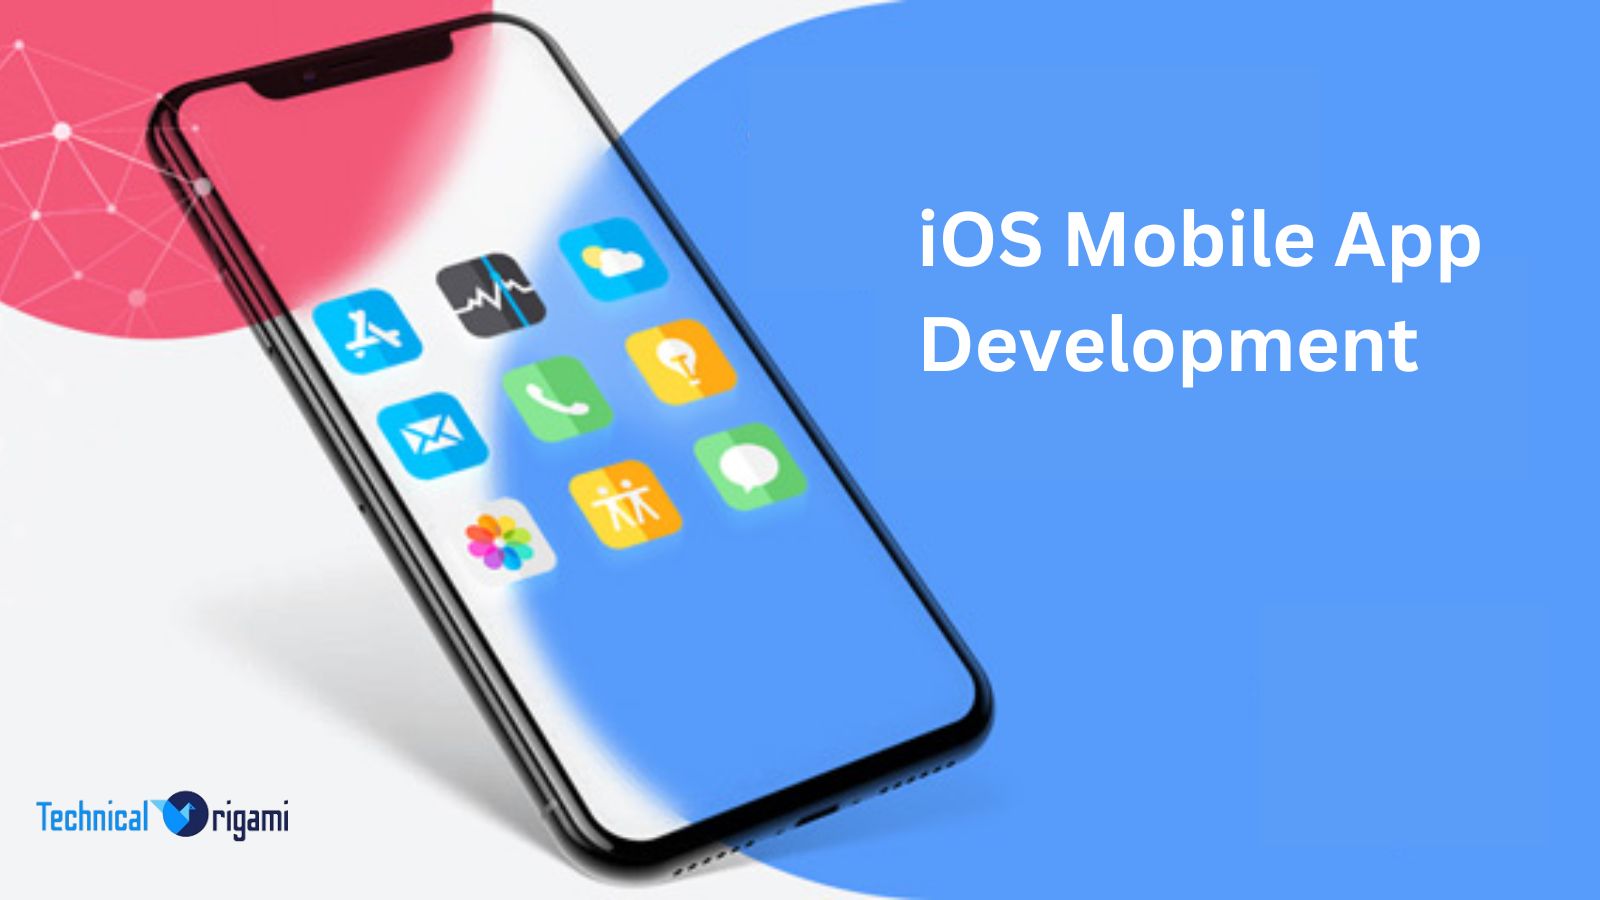 iOS Mobile App Development | Technical Origami